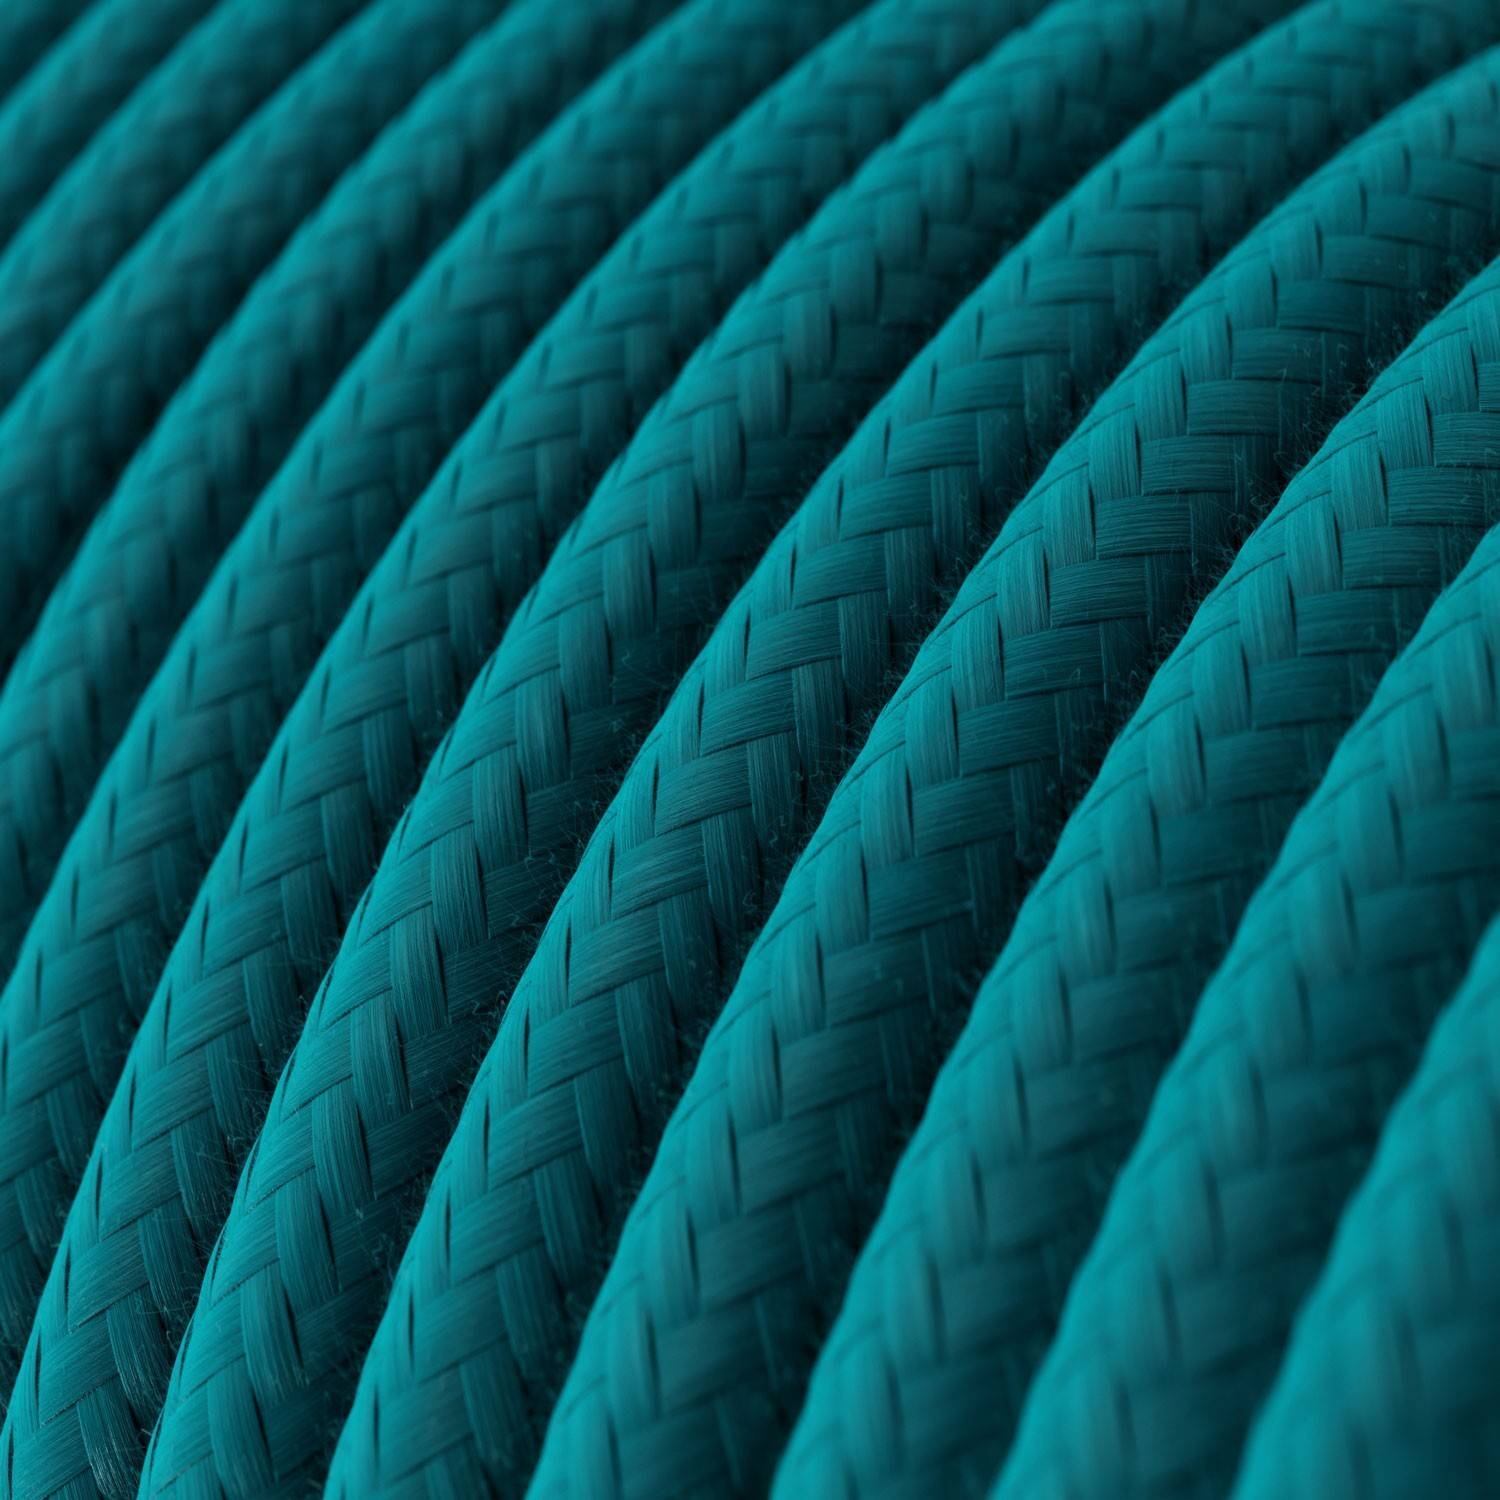 Cotton Cerulean Textile Cable - The Original Creative-Cables - RC21 round 2x0.75mm / 3x0.75mm